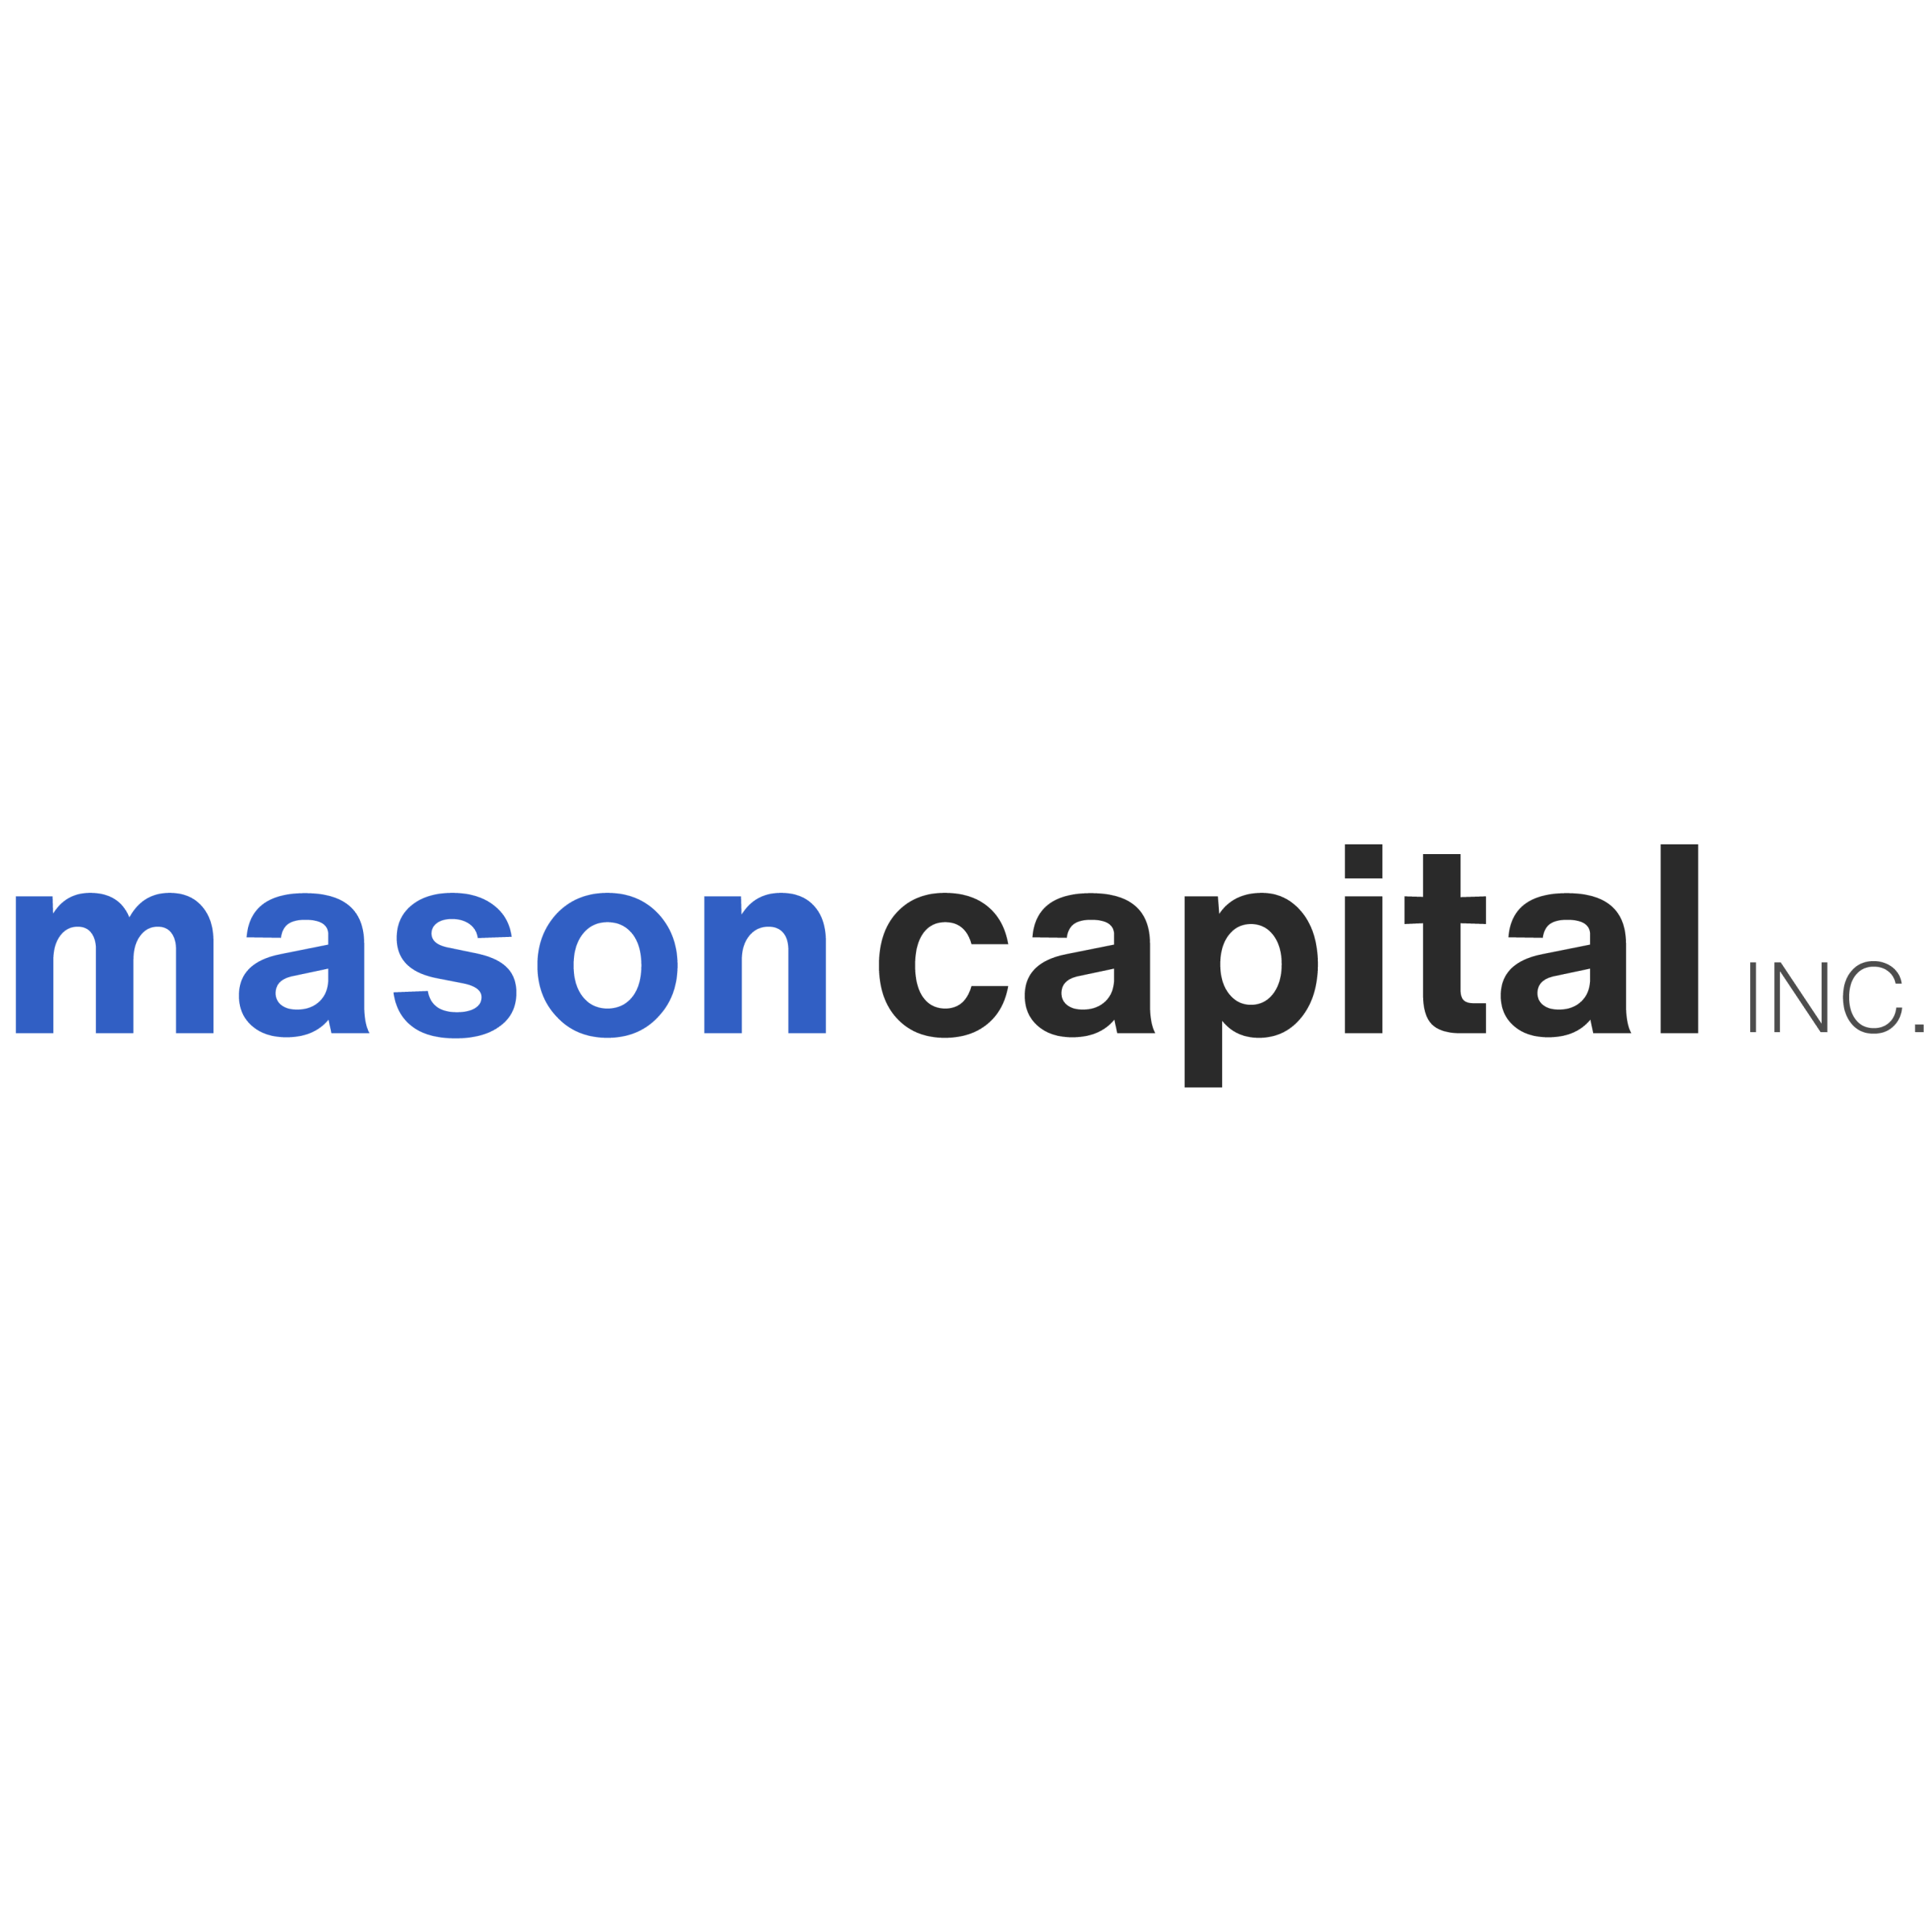 Mason Capital Inc